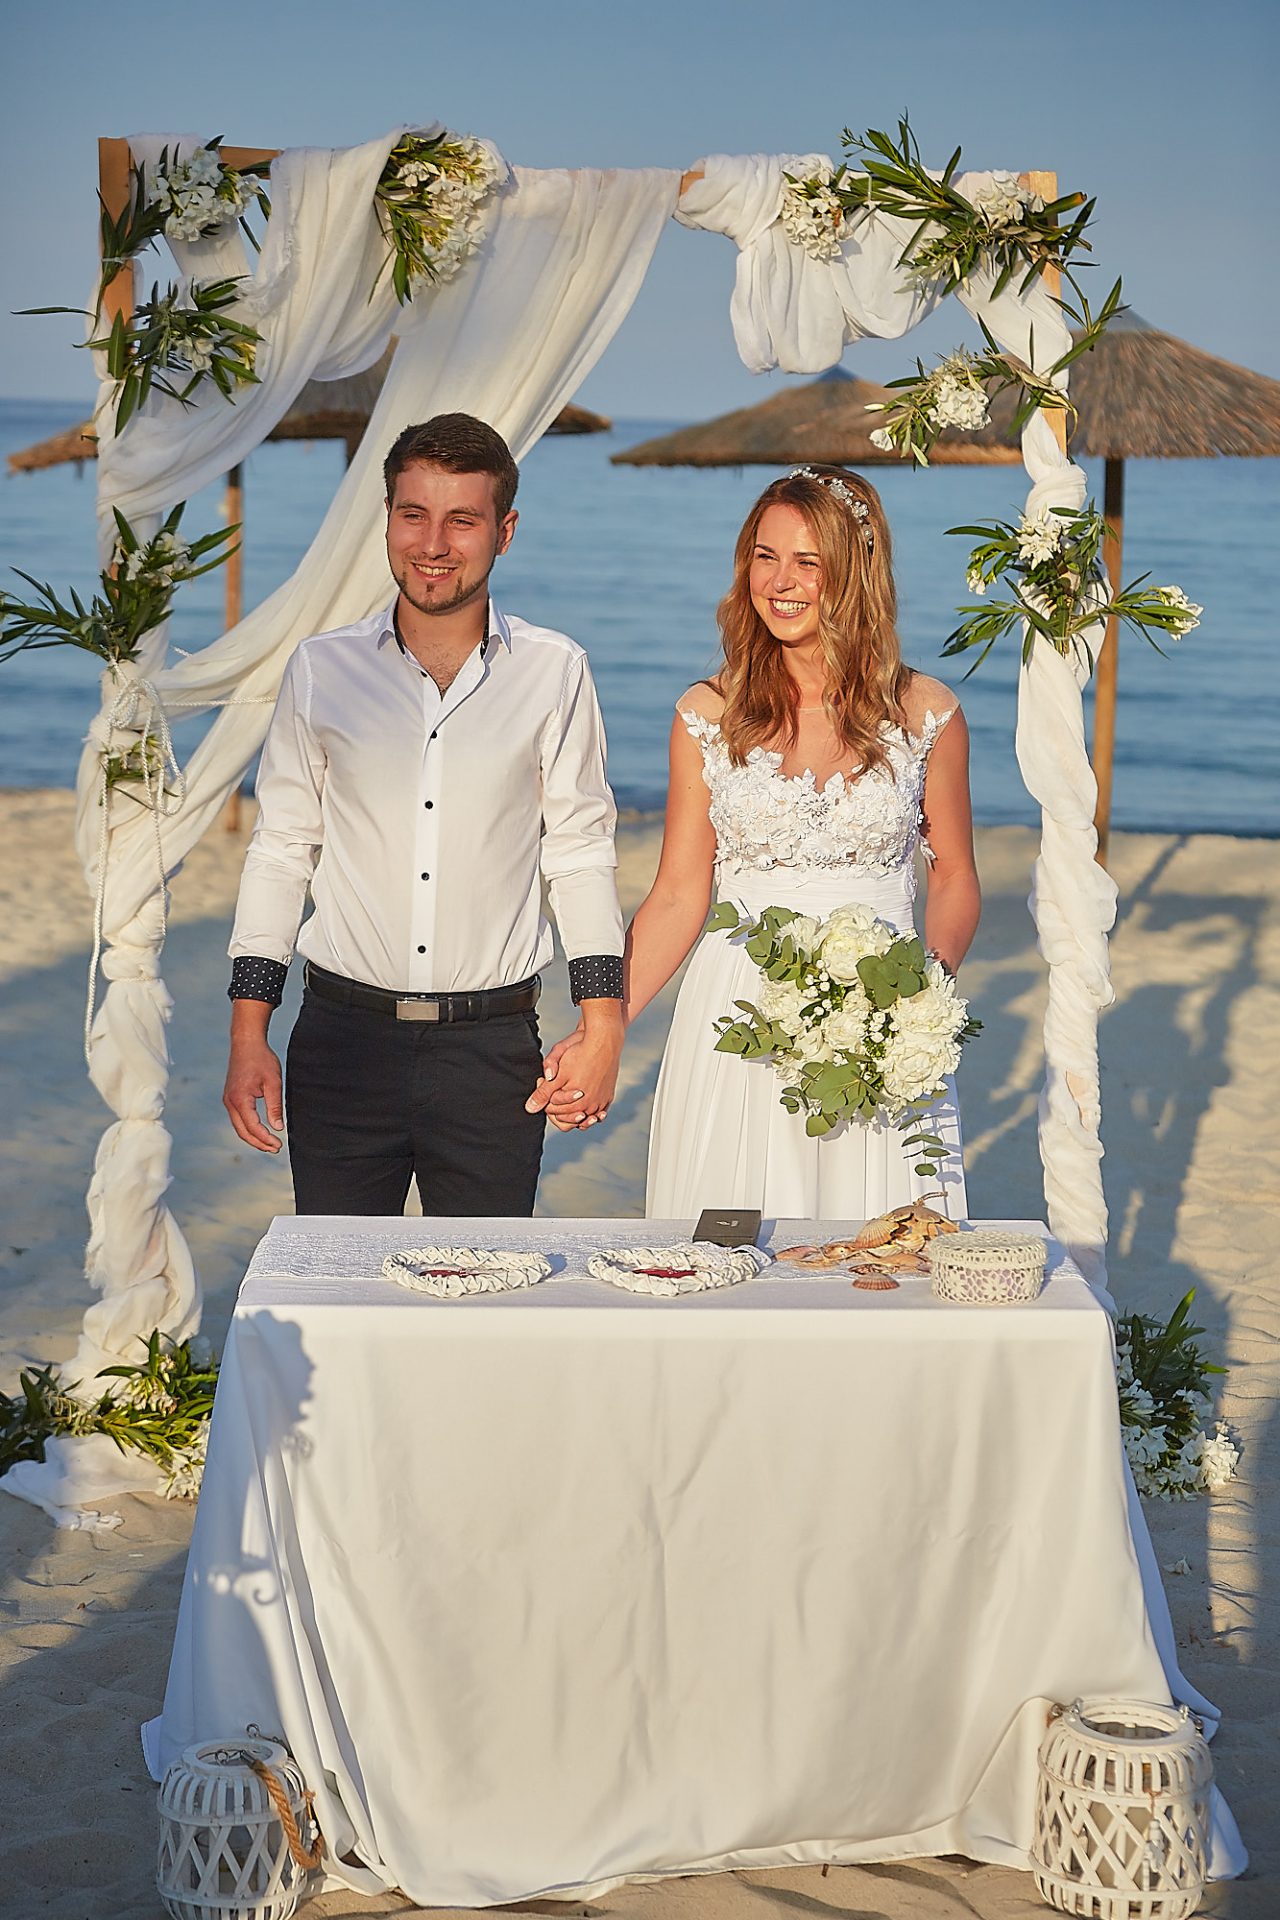 Thassos Golden Beach Wedding on the beach wedding table and decor